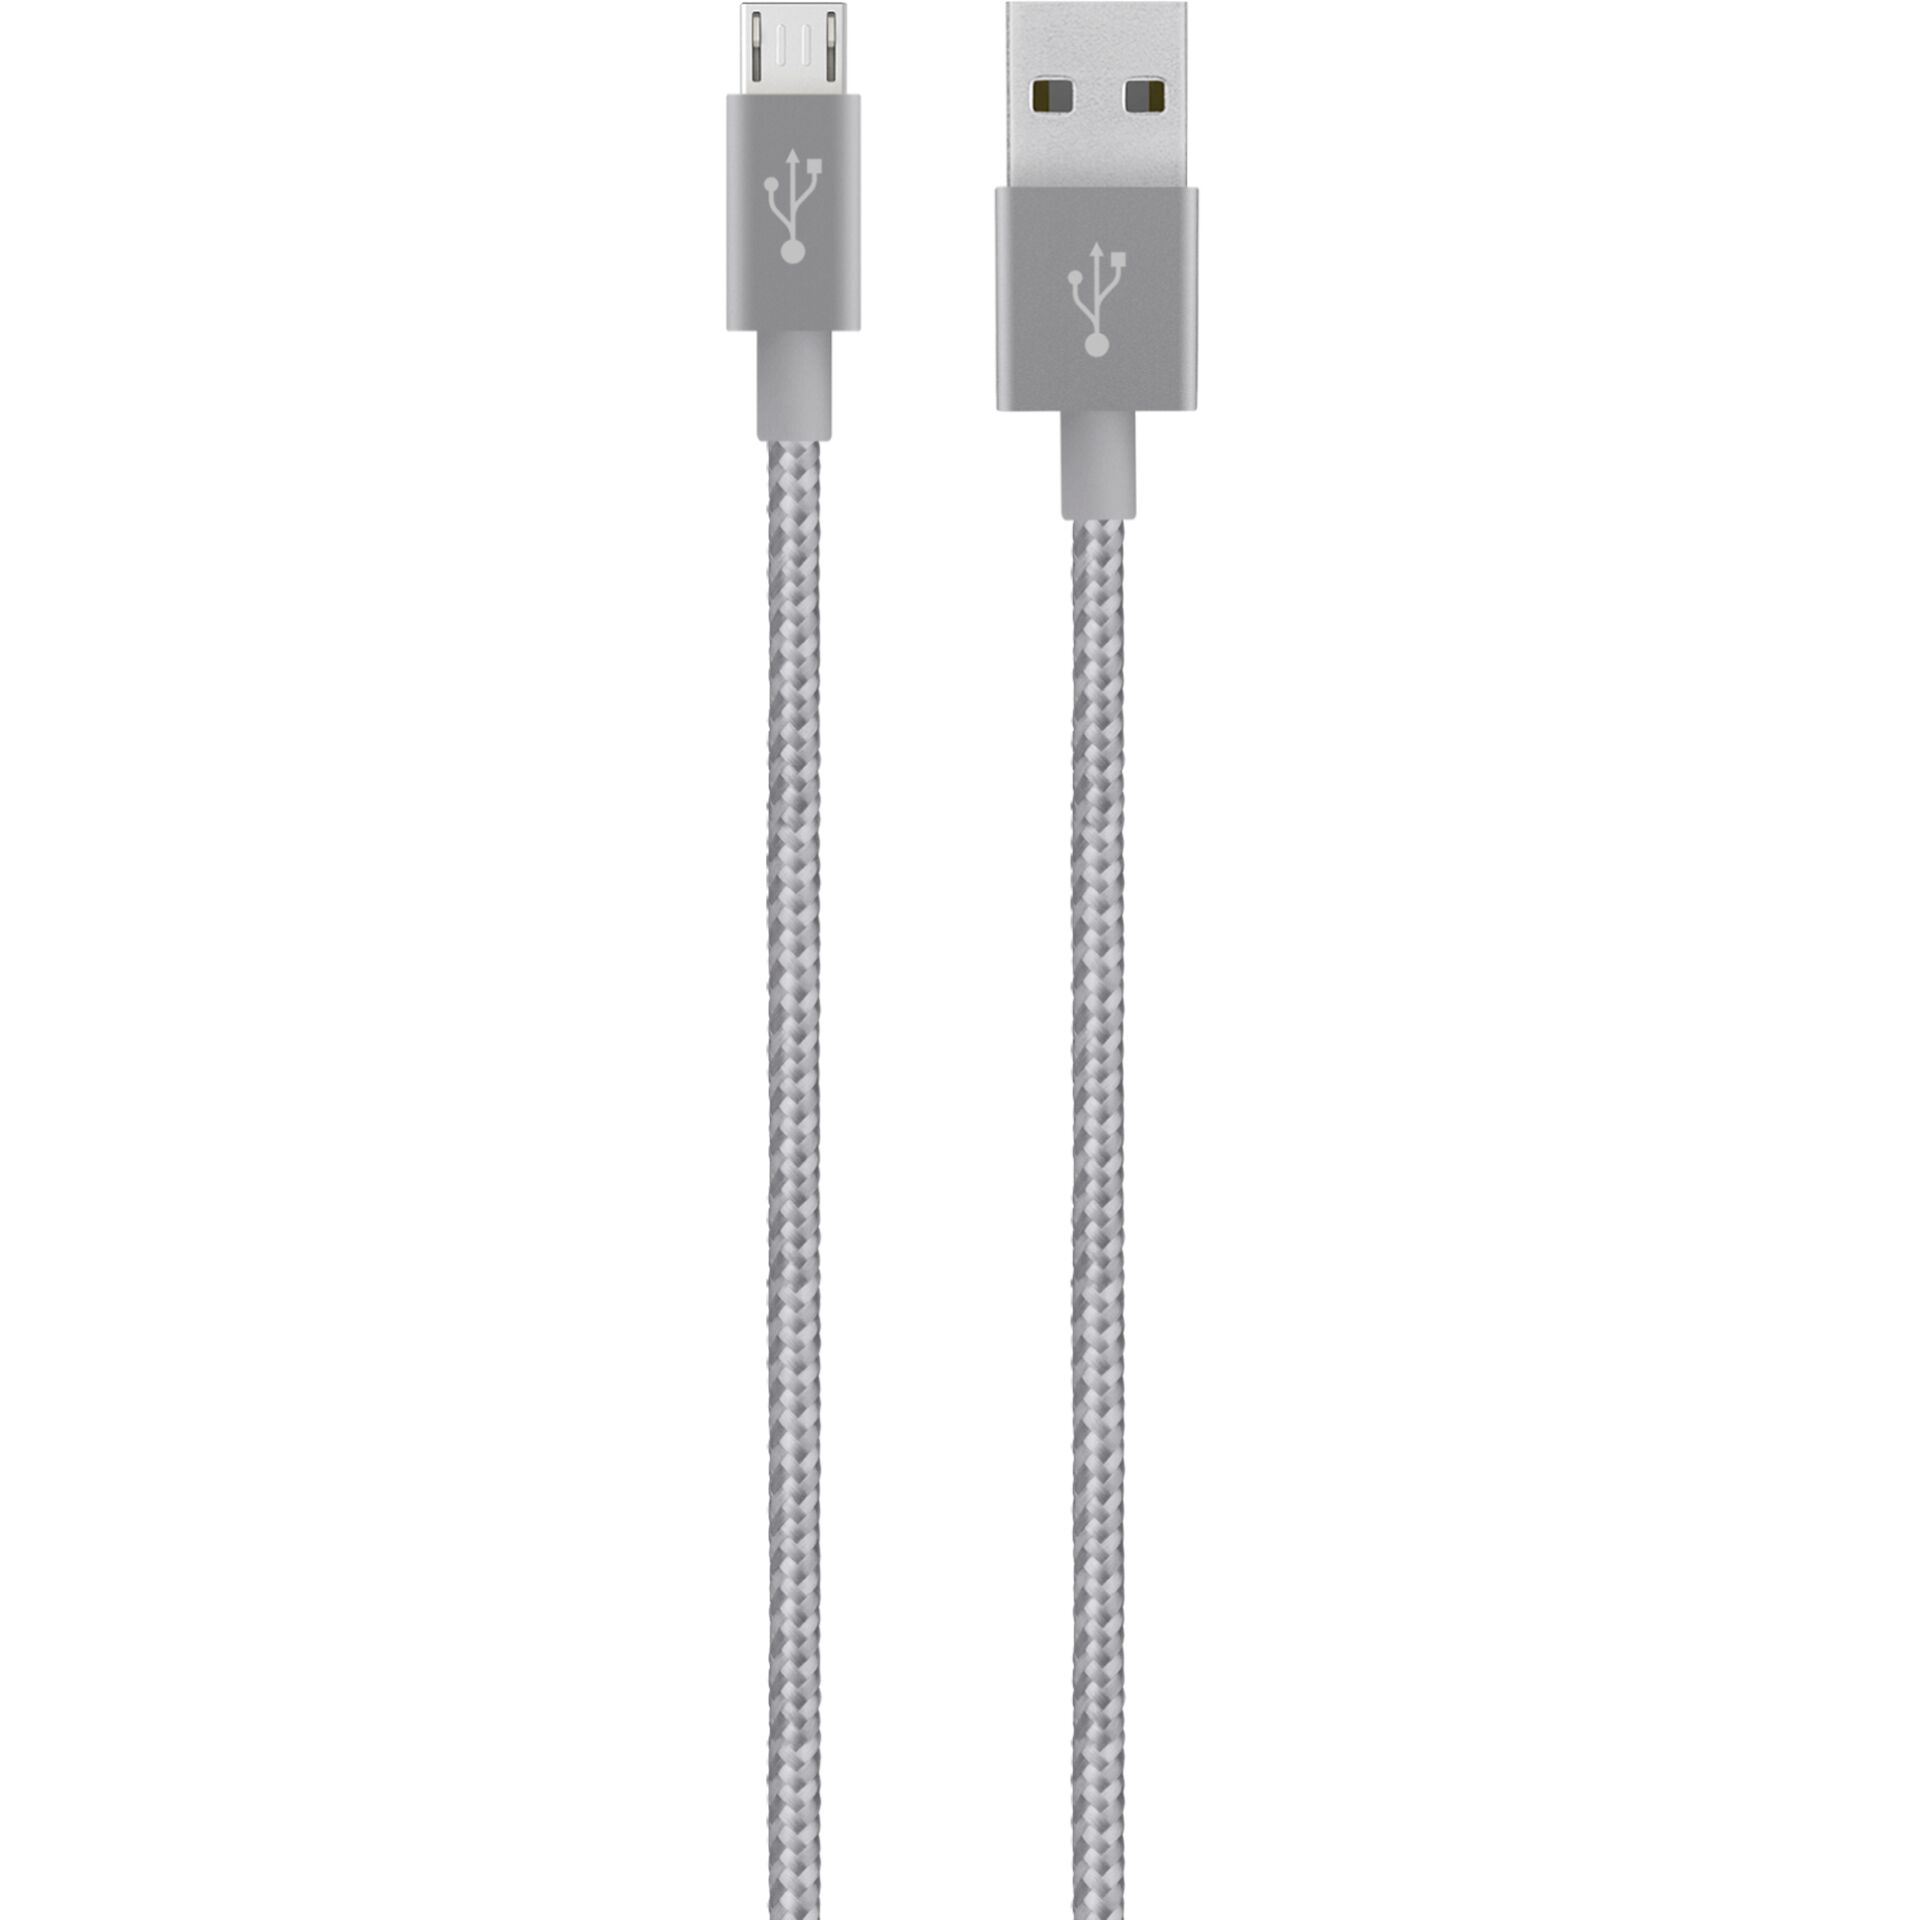 Belkin Premium MIXIT USB cavo 1,2 m grigio F2CU021bt04-GRY